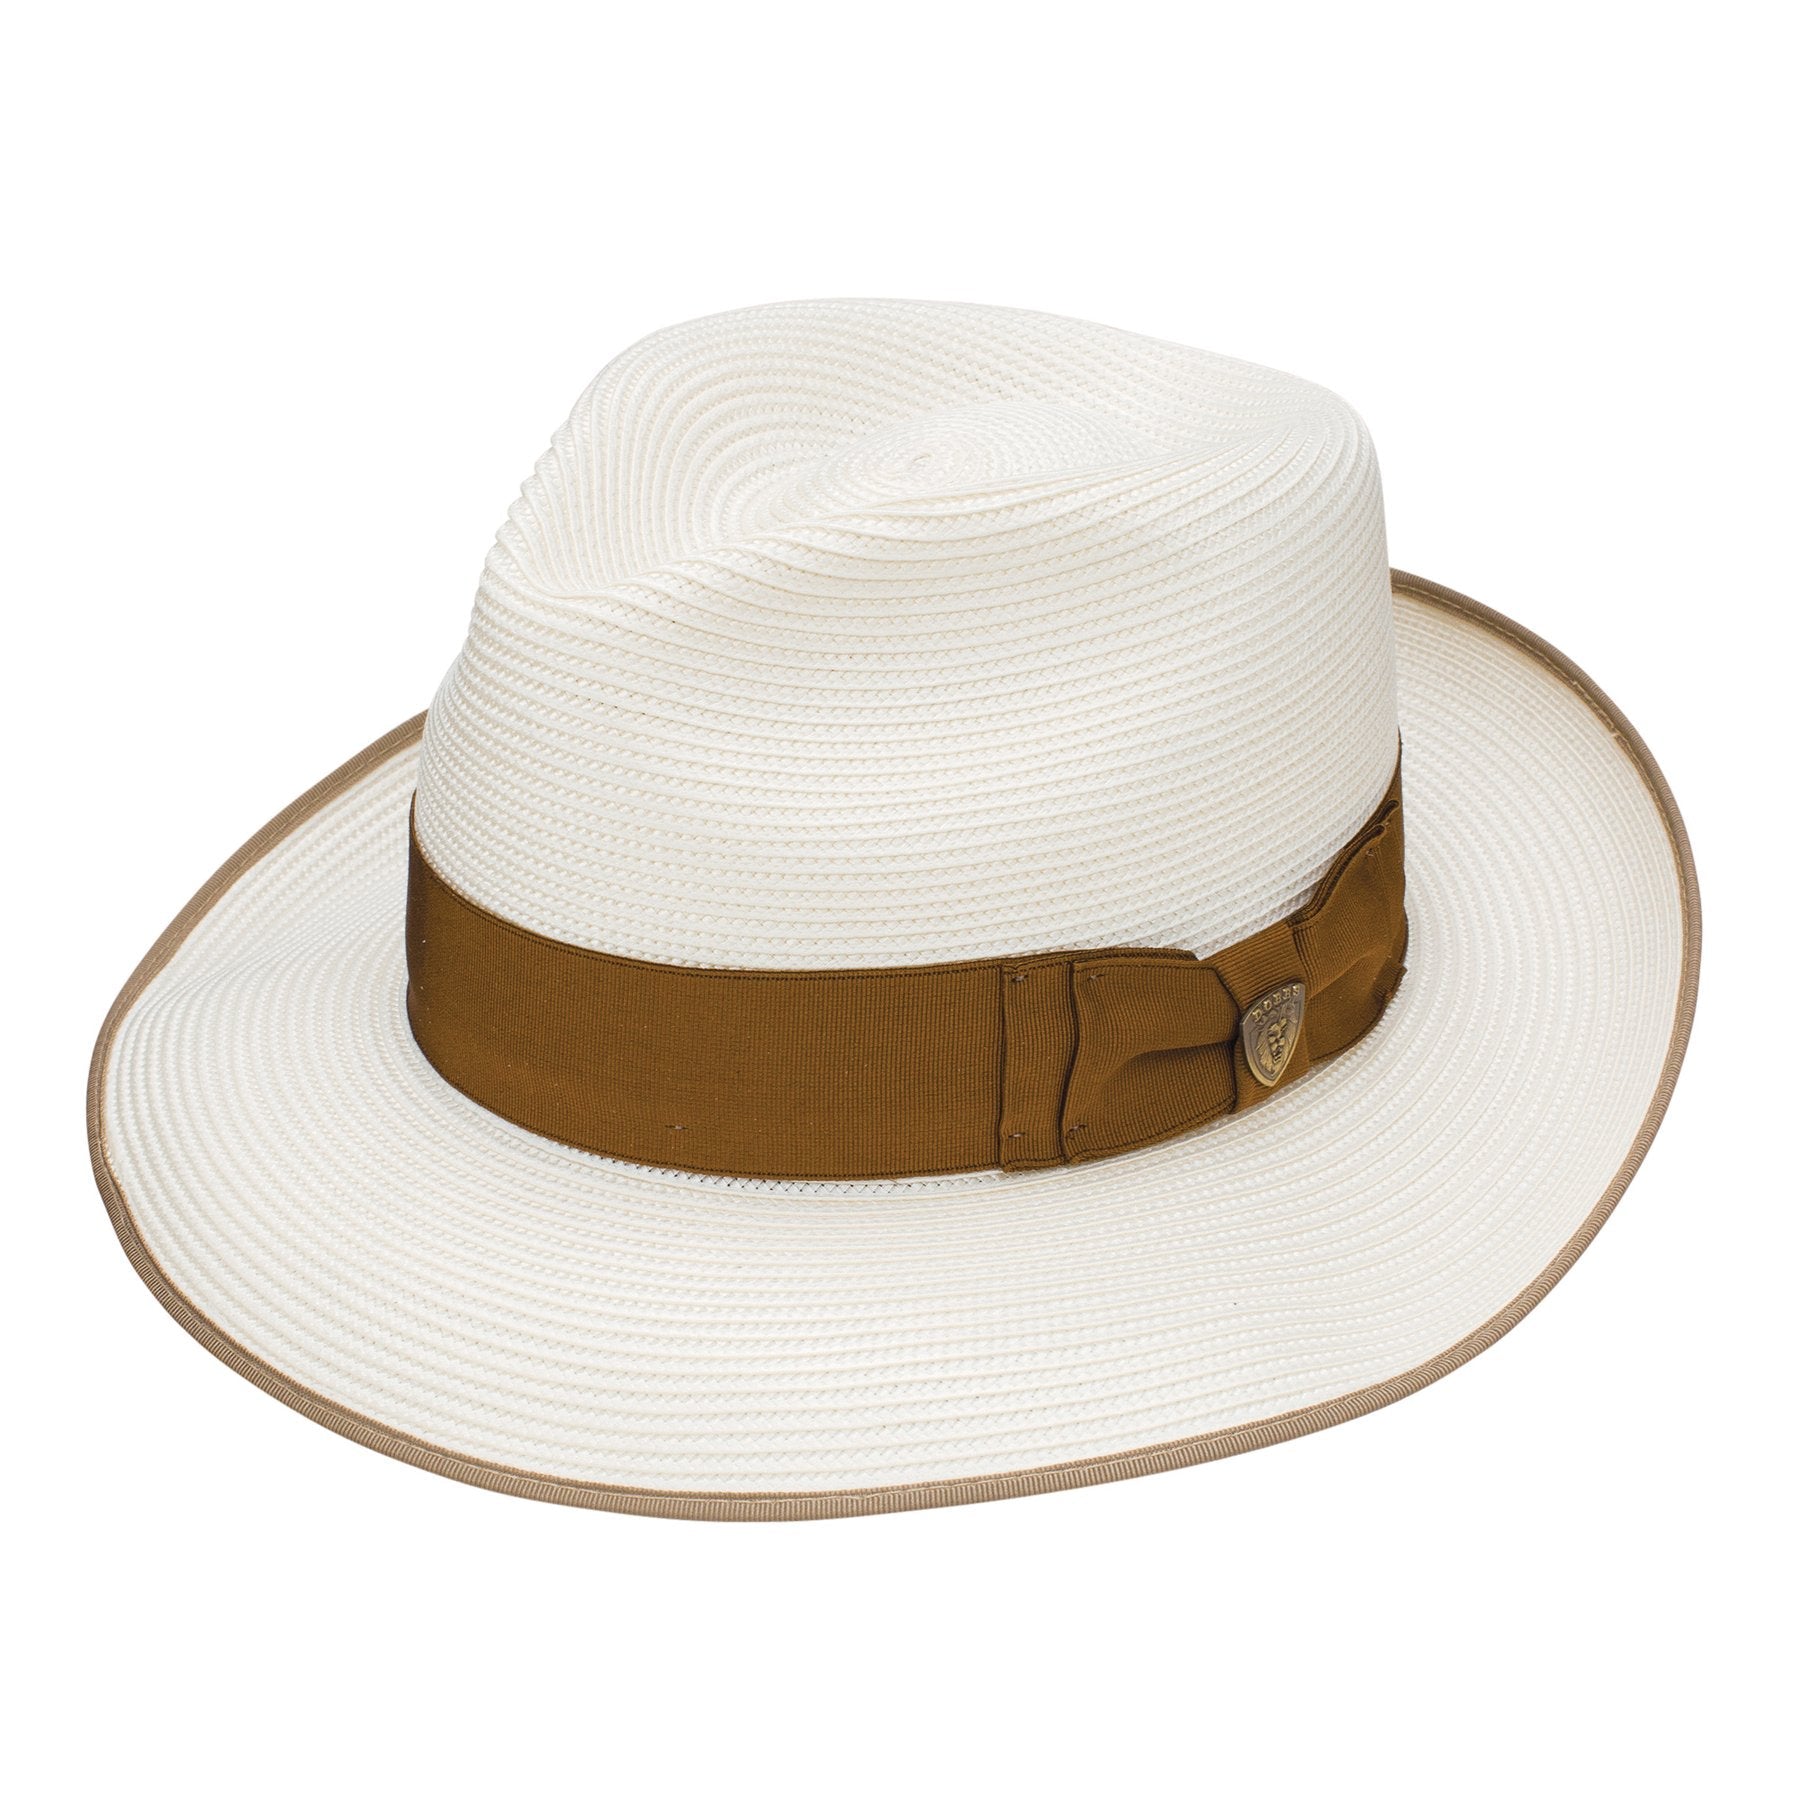 Soft Milan Straw Hat with Big Bow